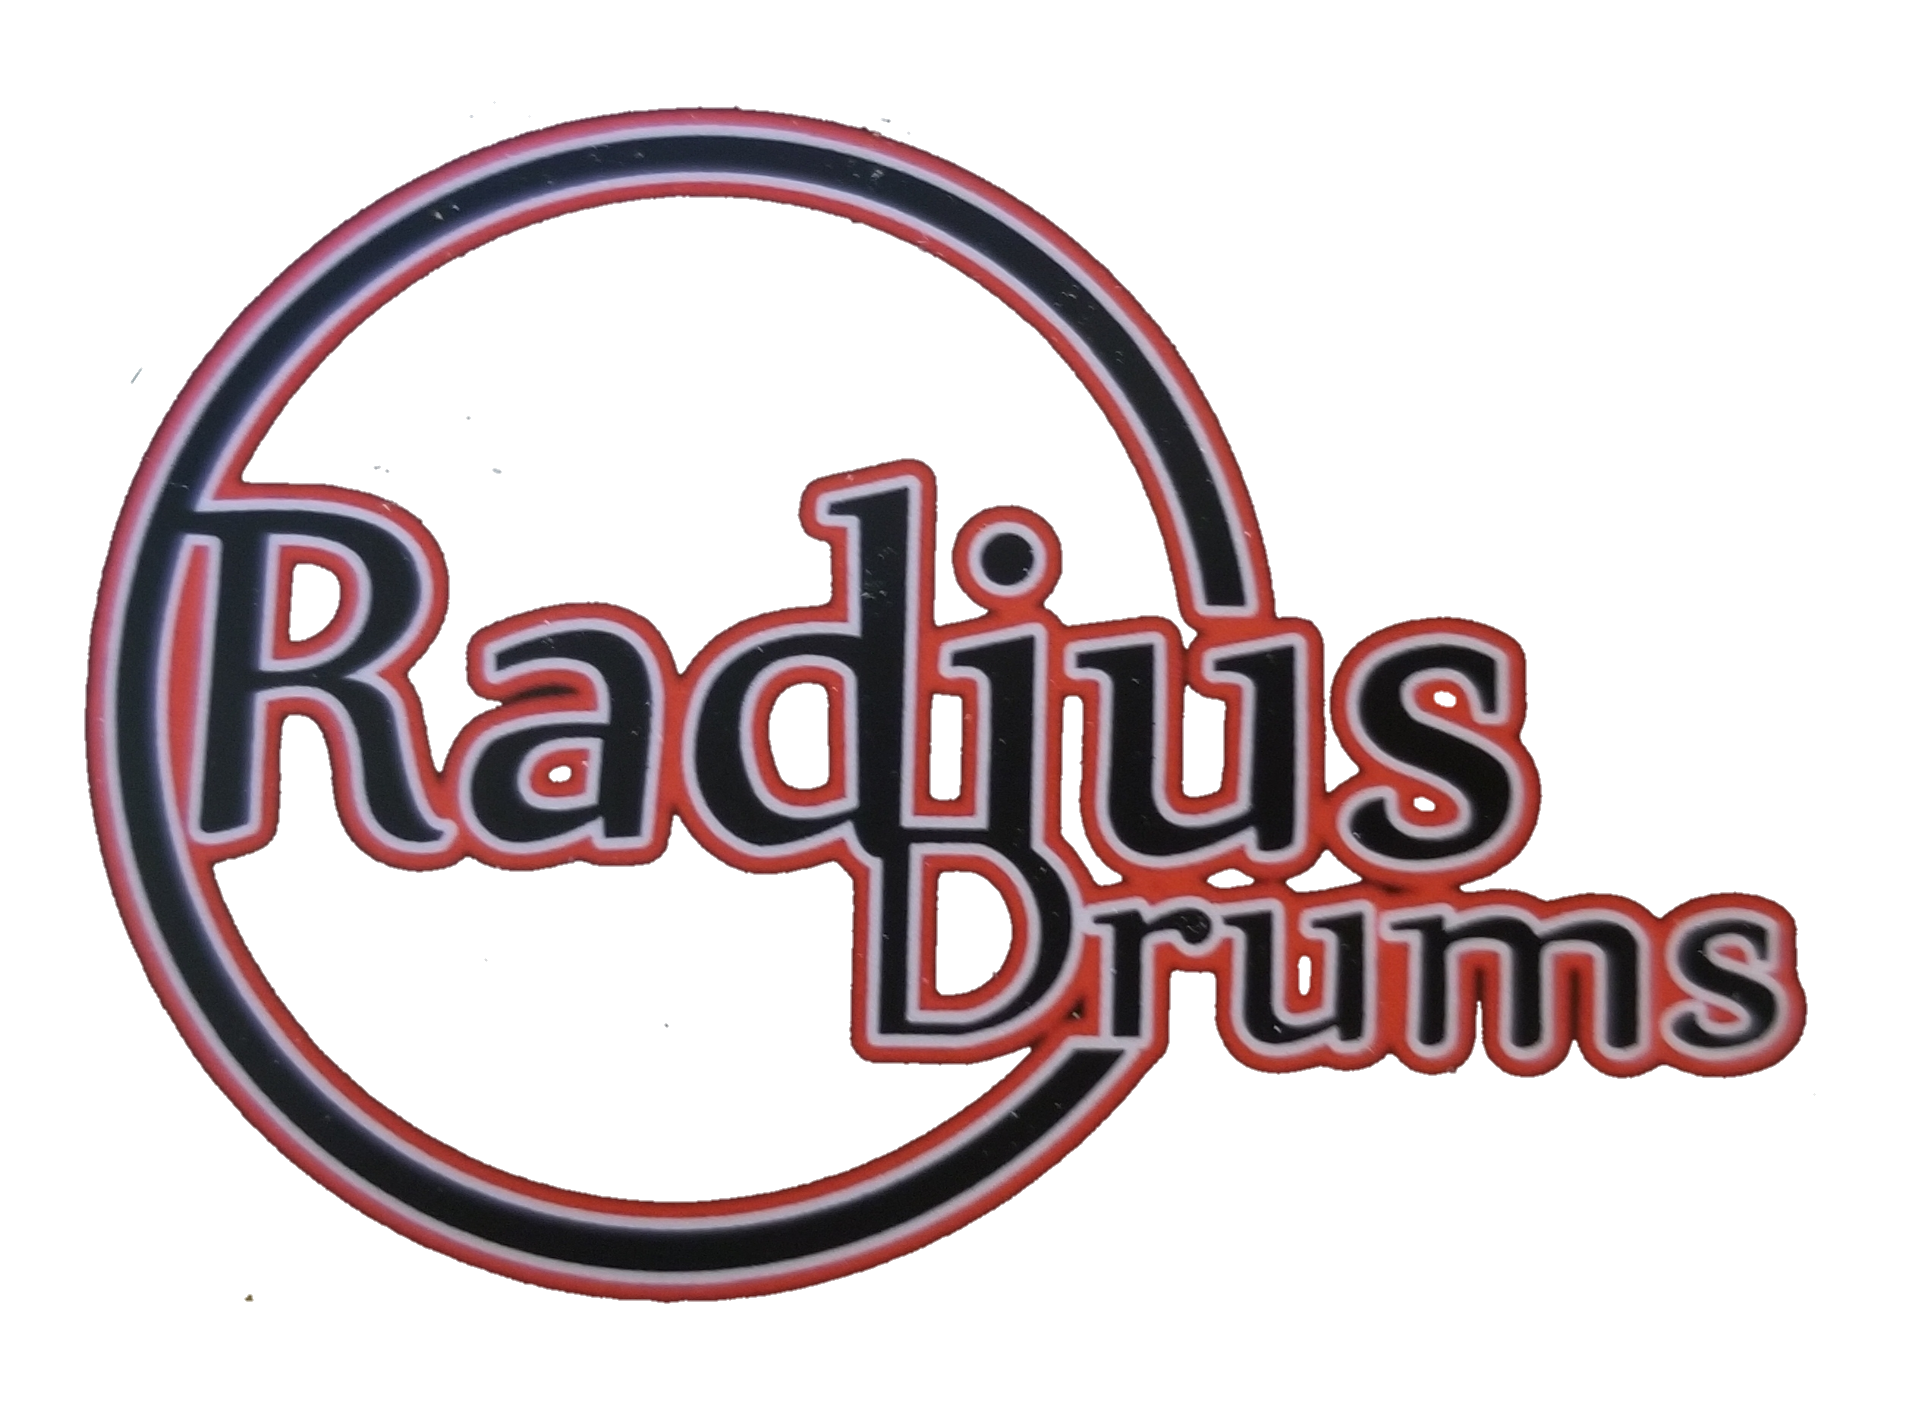 Radius Drums